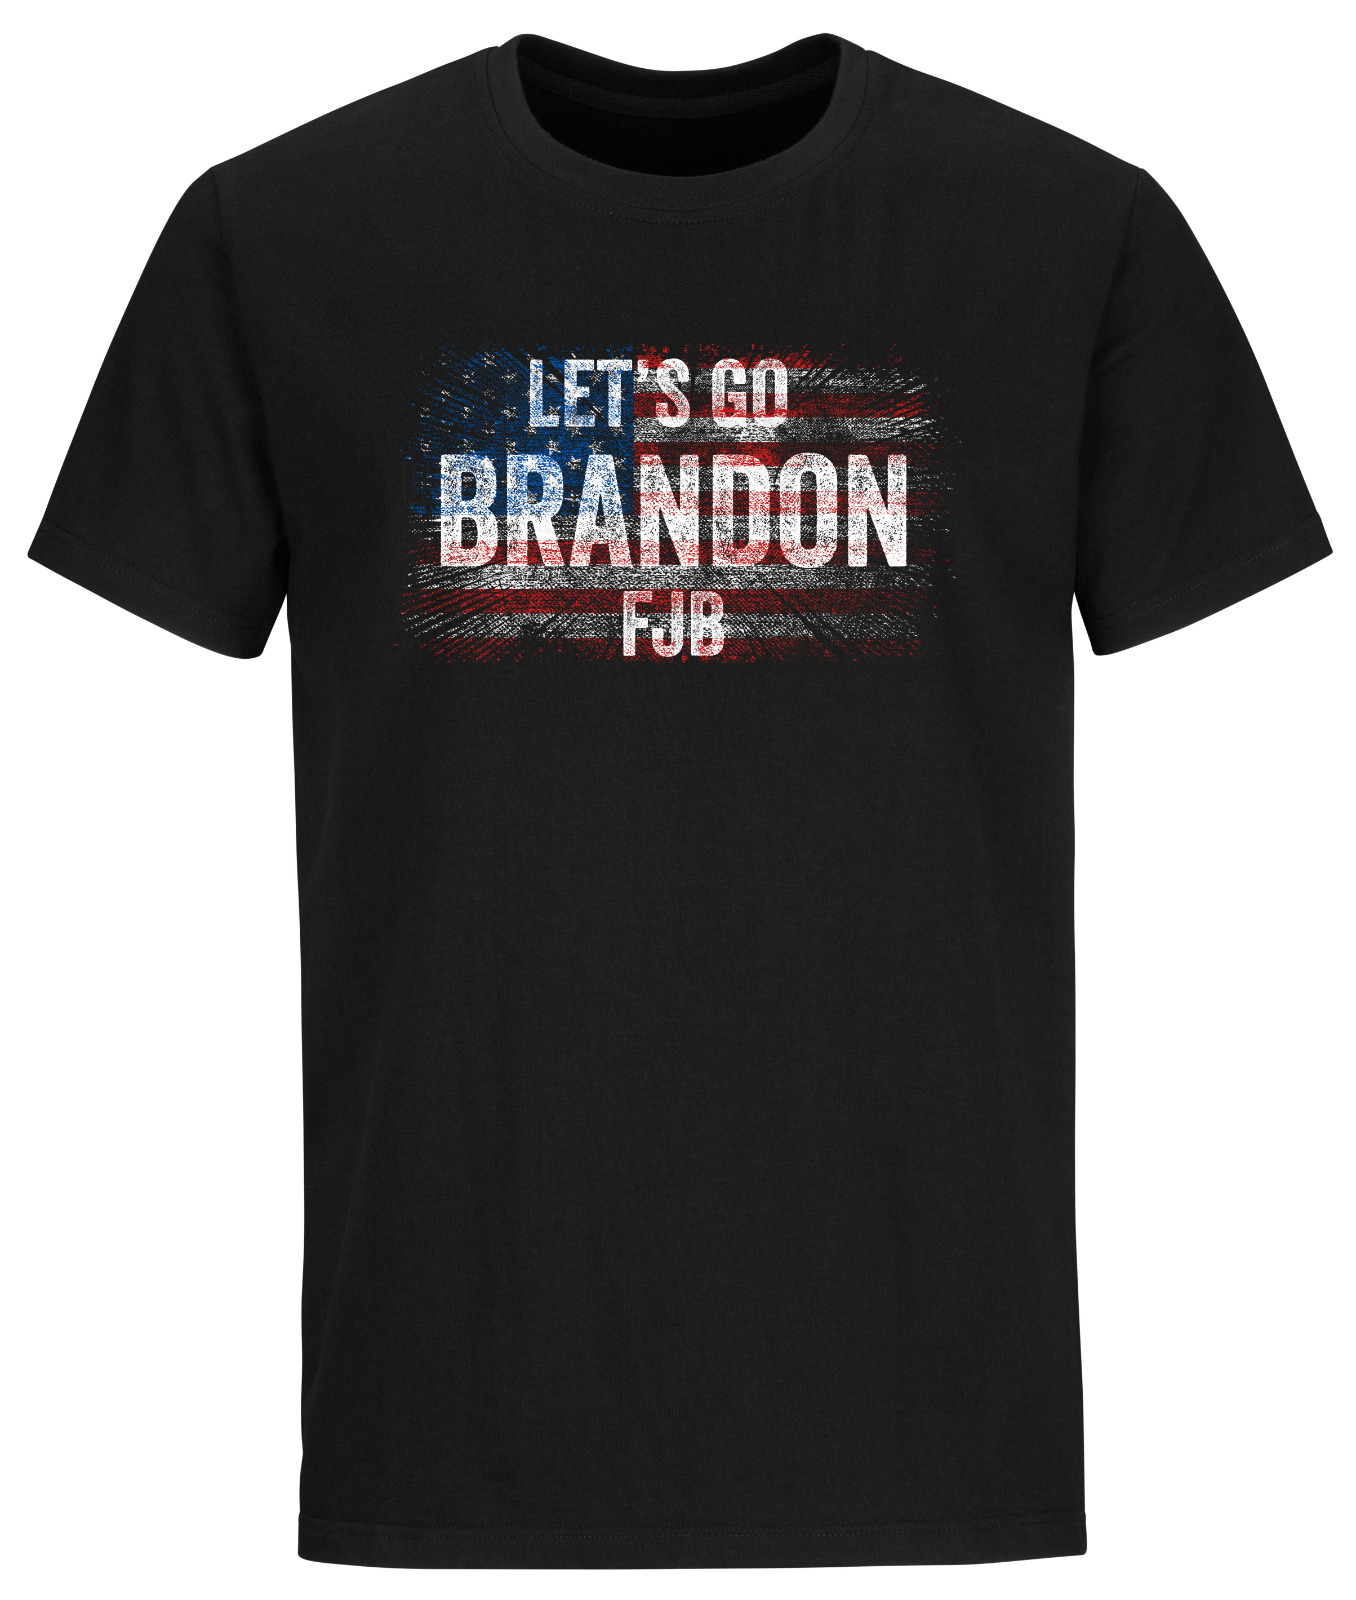 FJB Let's Go Brandon Joe Biden Humor T shirt Funny Political Shirts Trump 2024